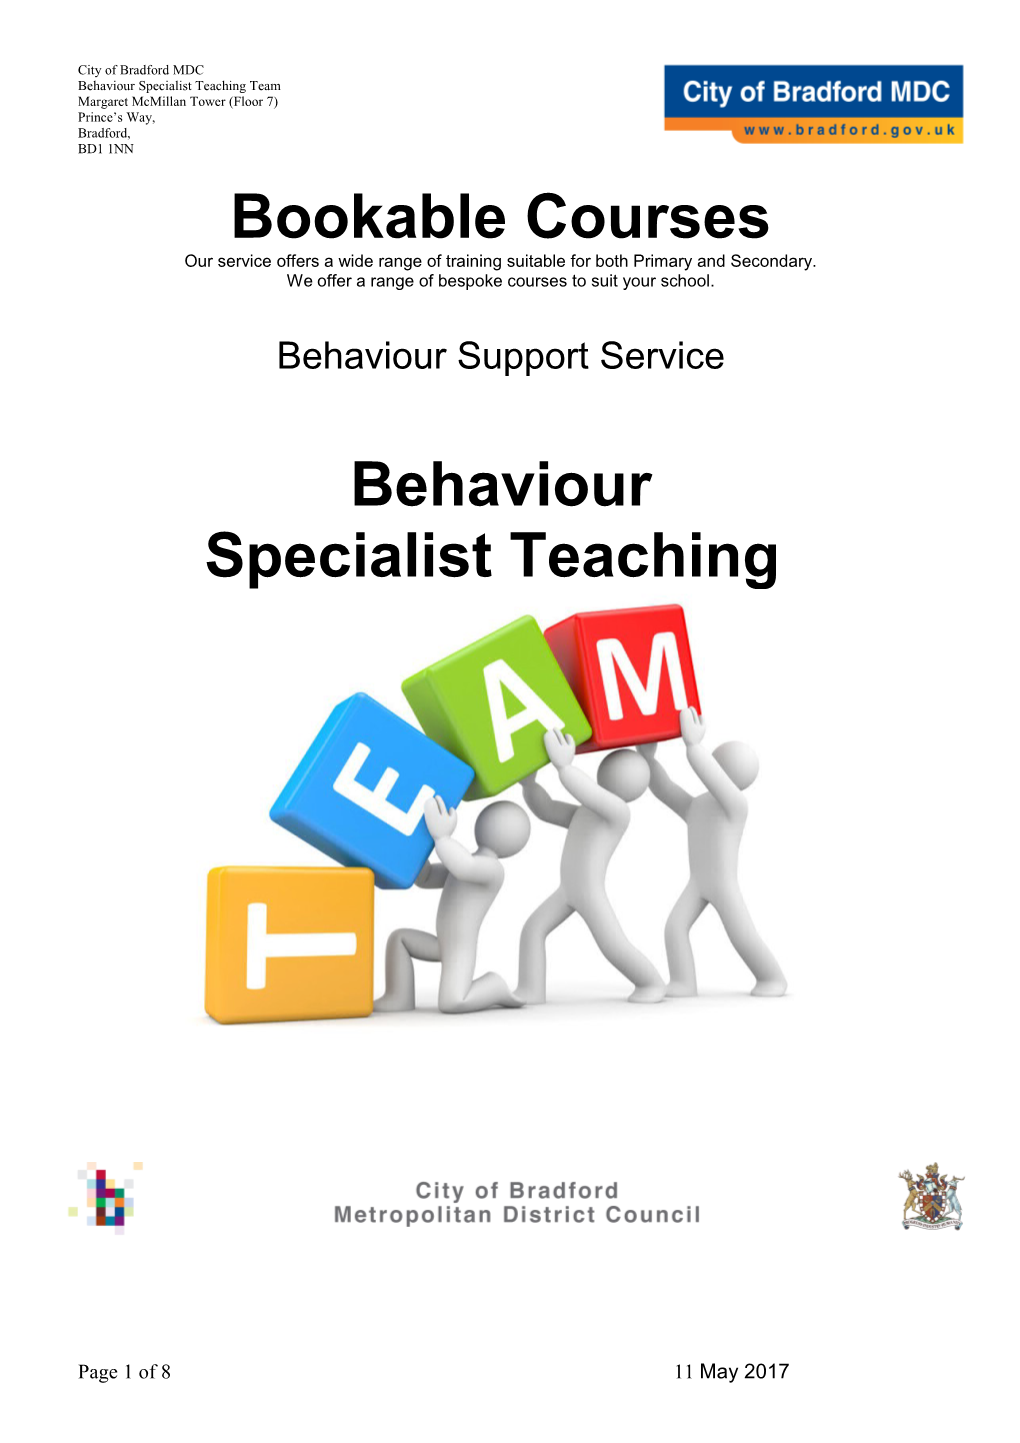 Behaviour Specialist Teaching Team